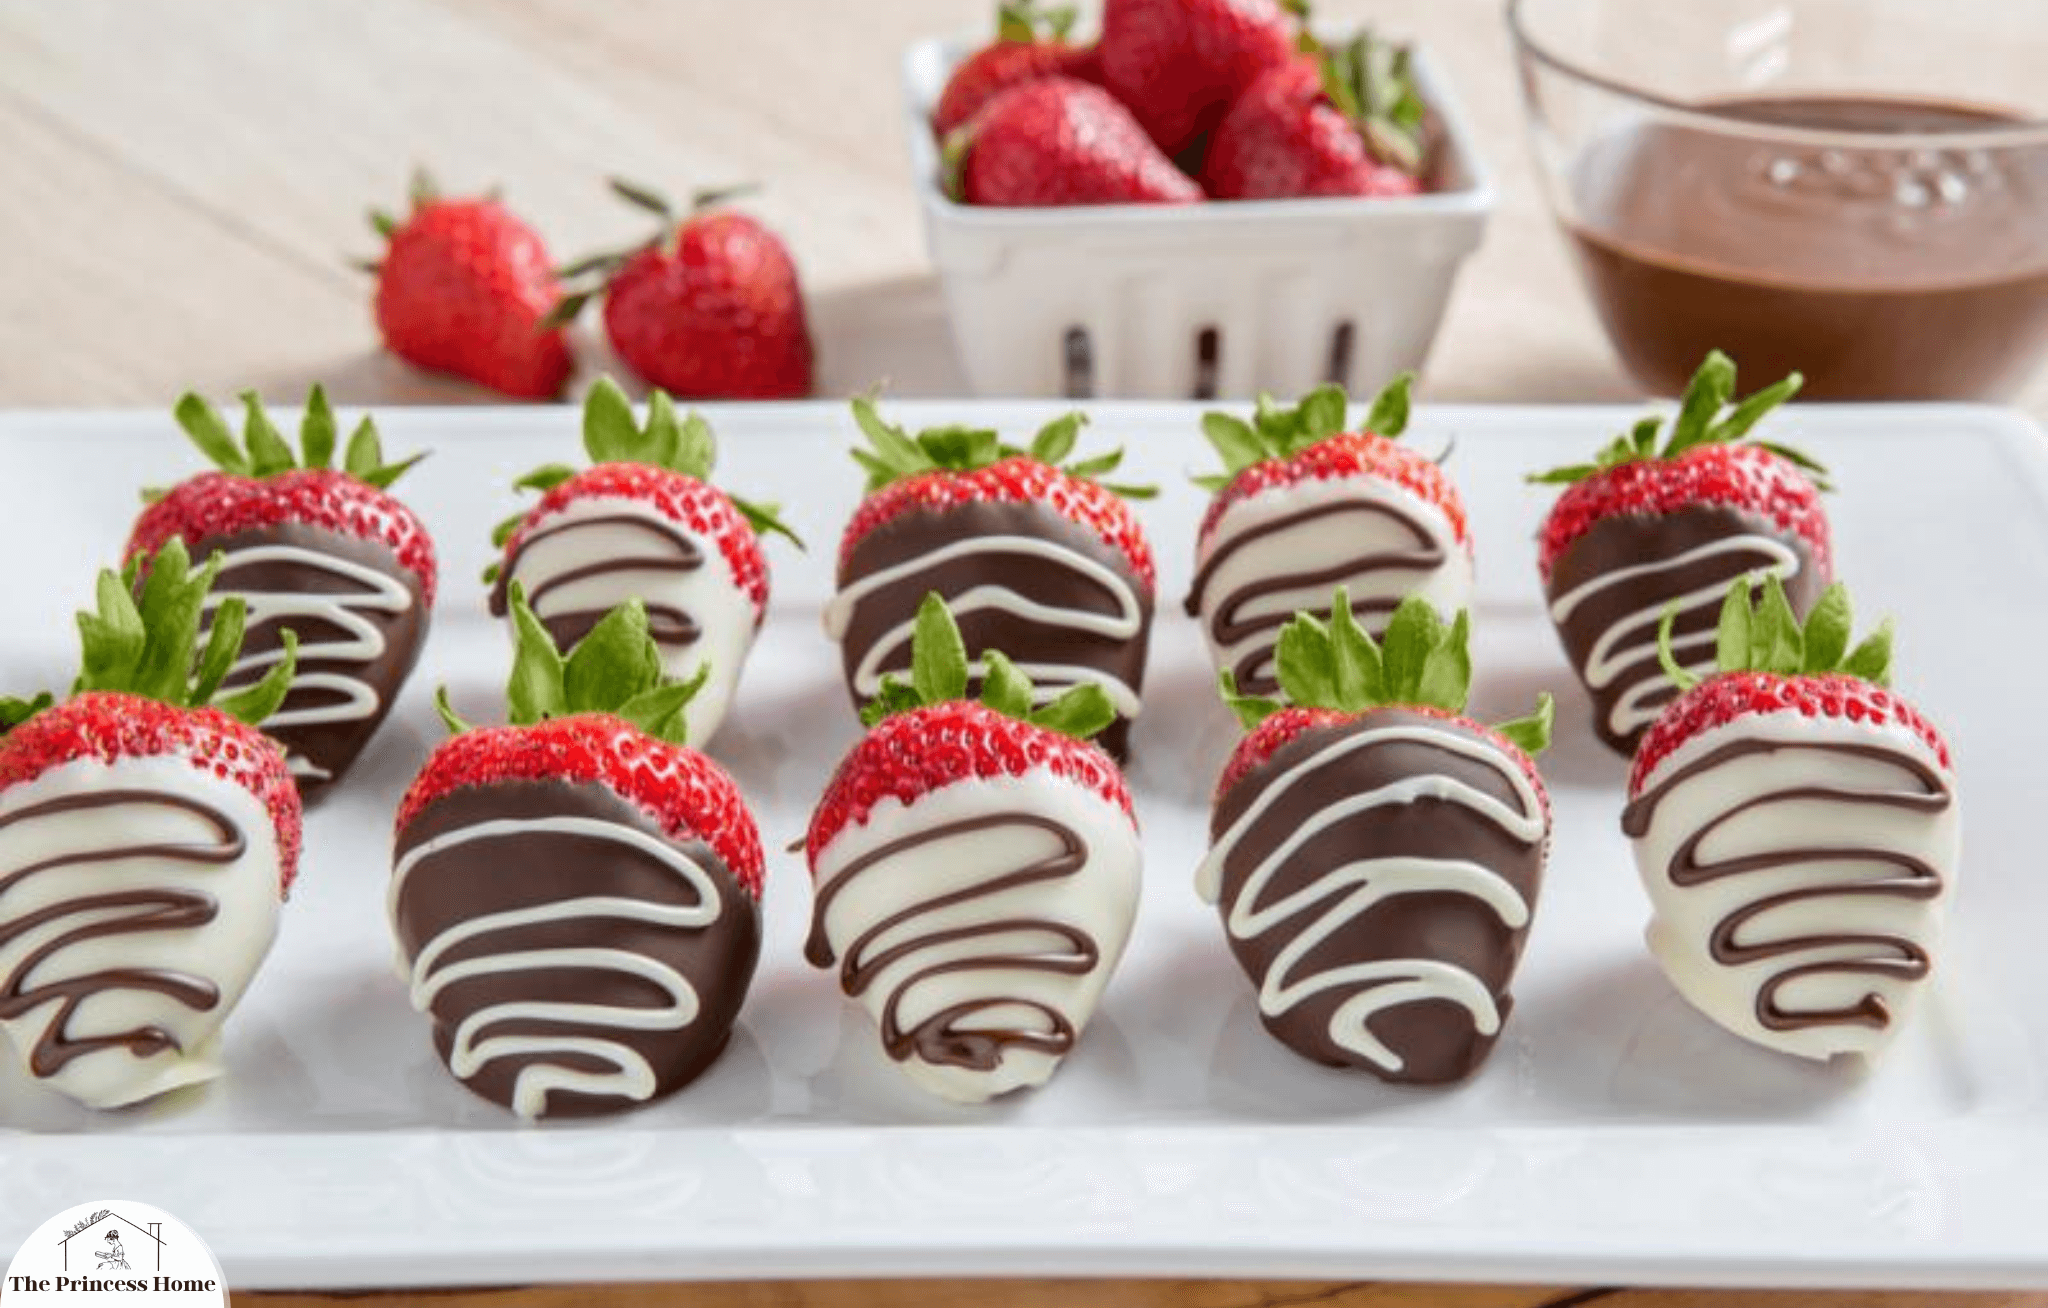 1.Chocolate-Dipped Strawberries: